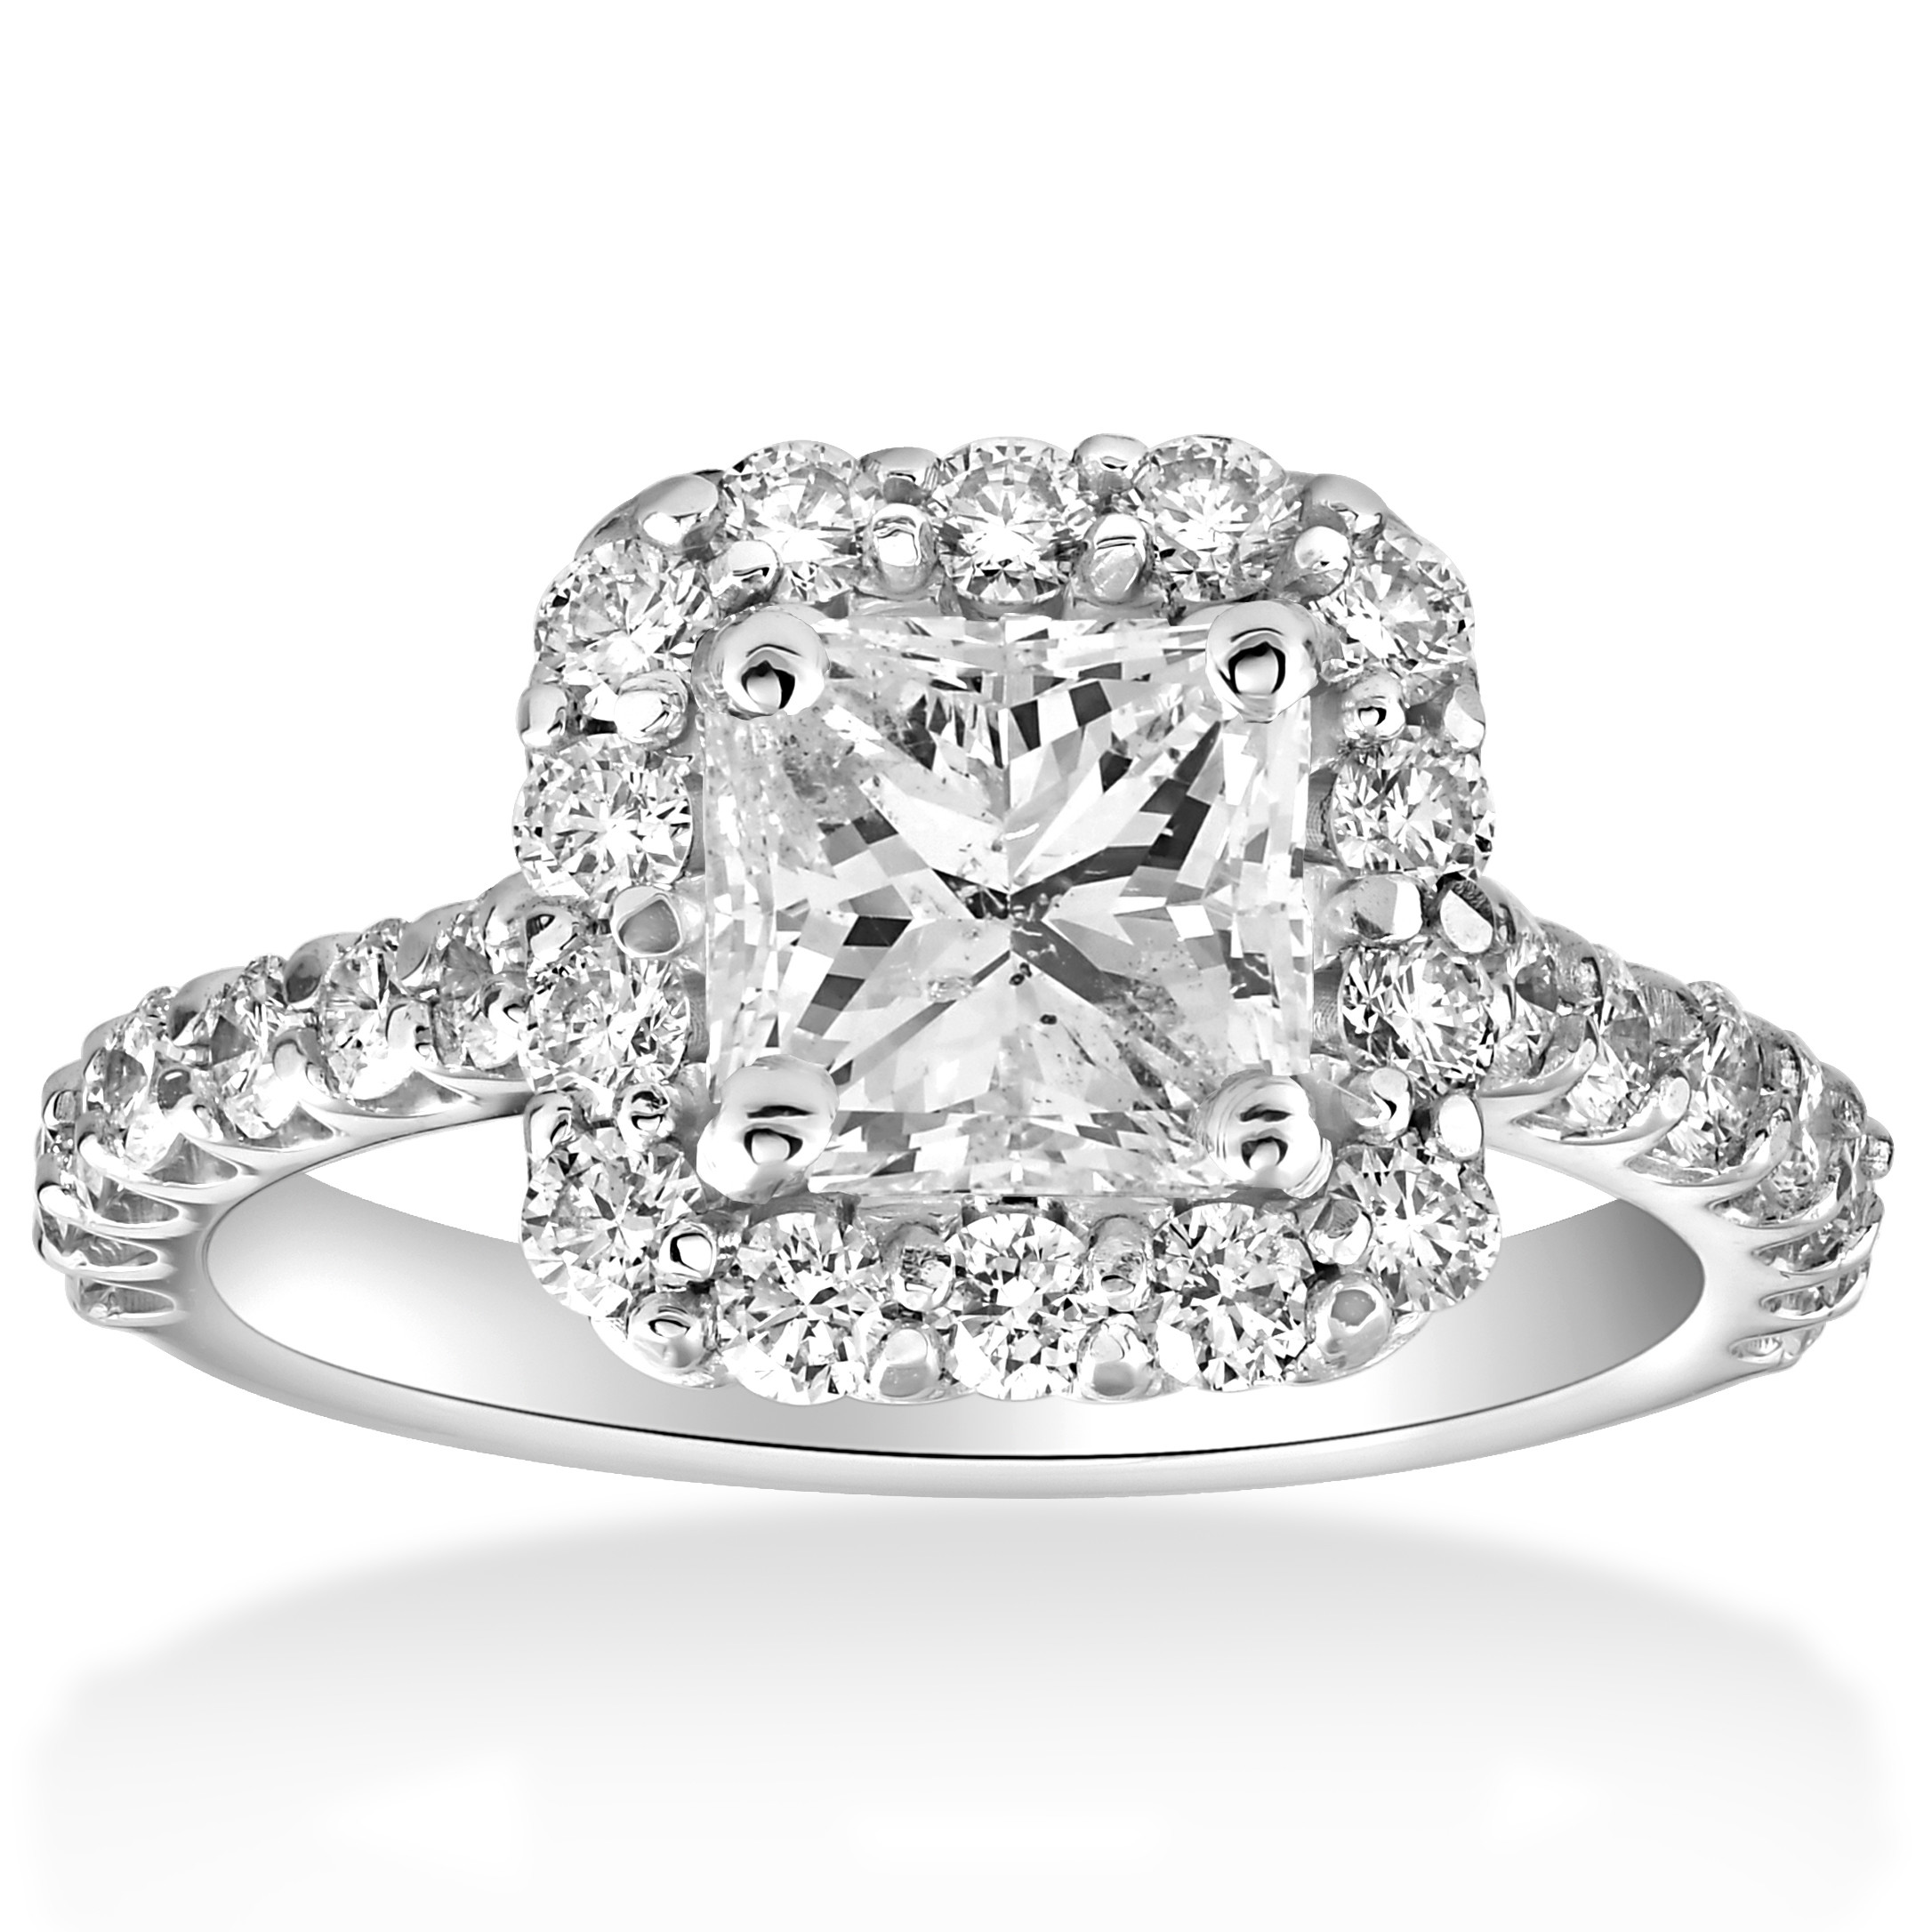 Princess Cut Halo Engagement Rings
 2 cttw Halo Princess Cut Solitaire Diamond Engagement Ring